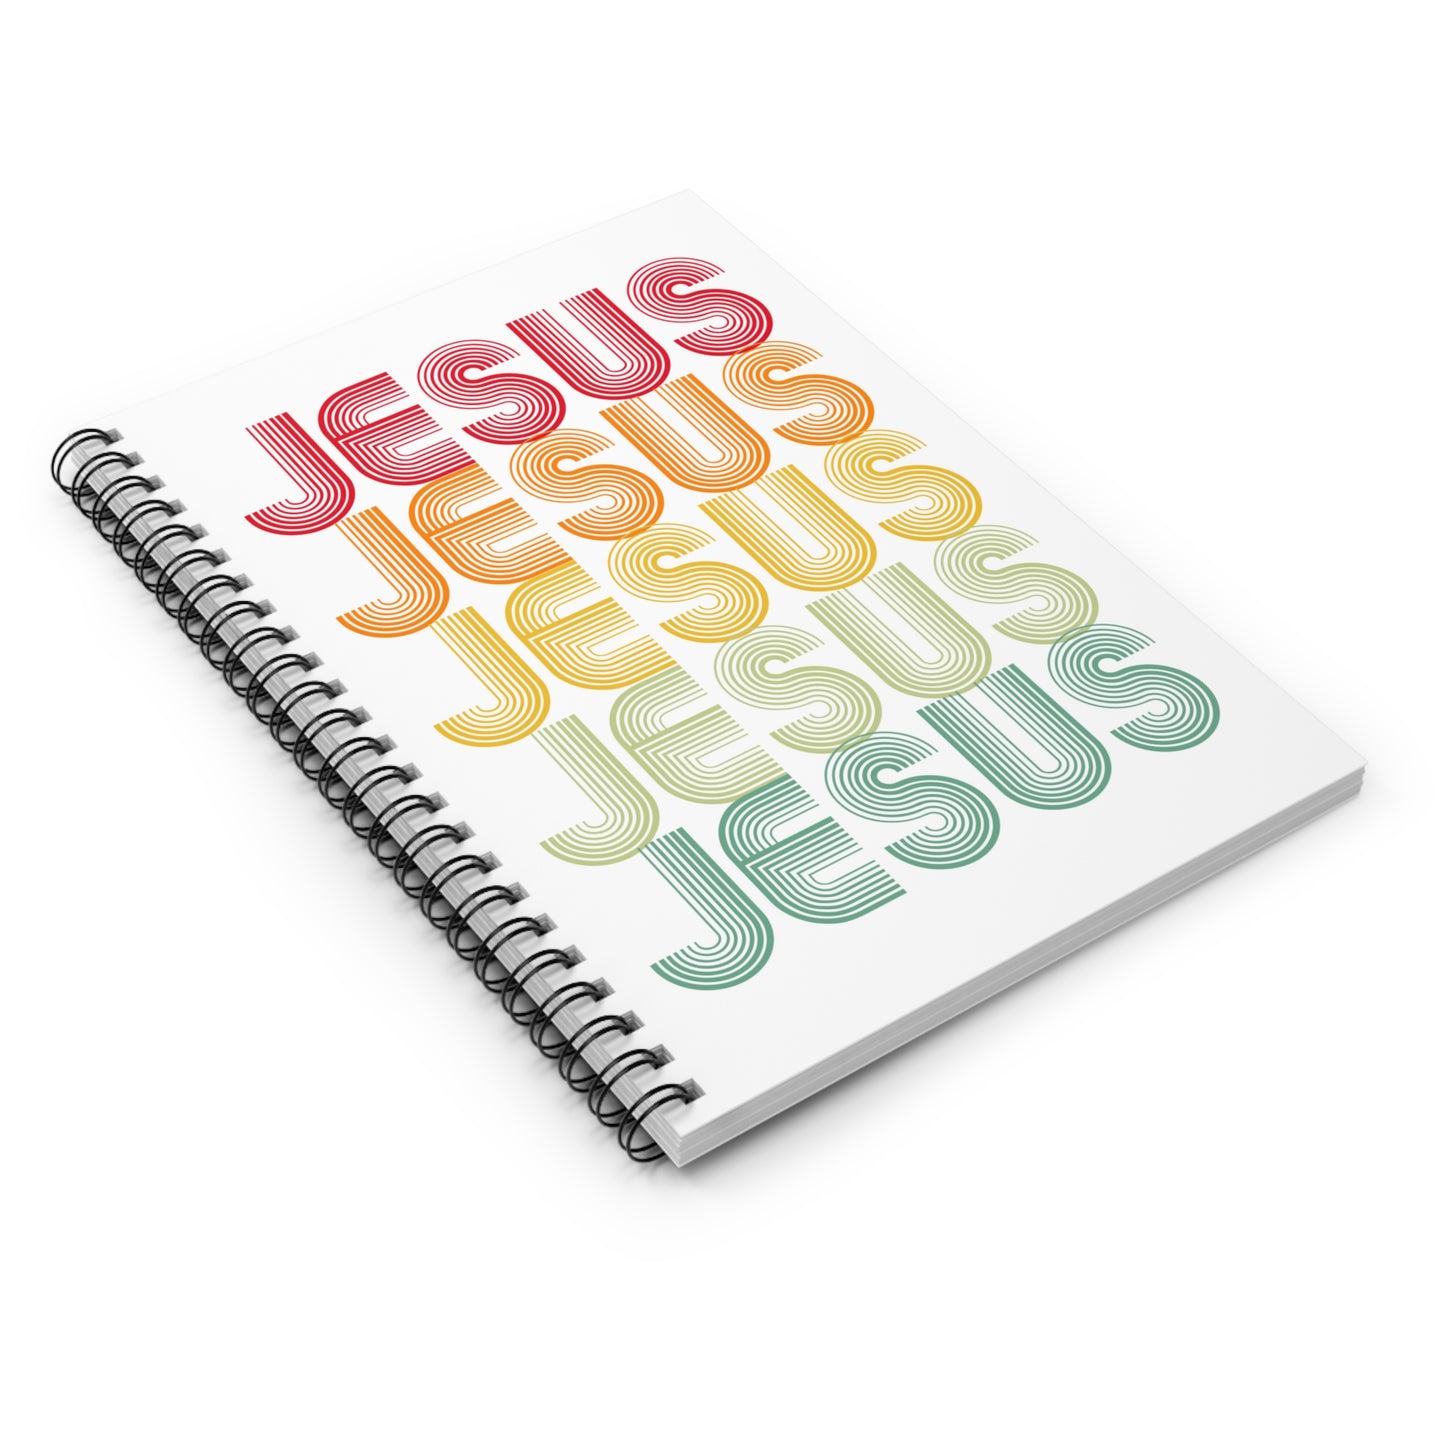 Retro JESUS Journal | Lined Spiral Notebook